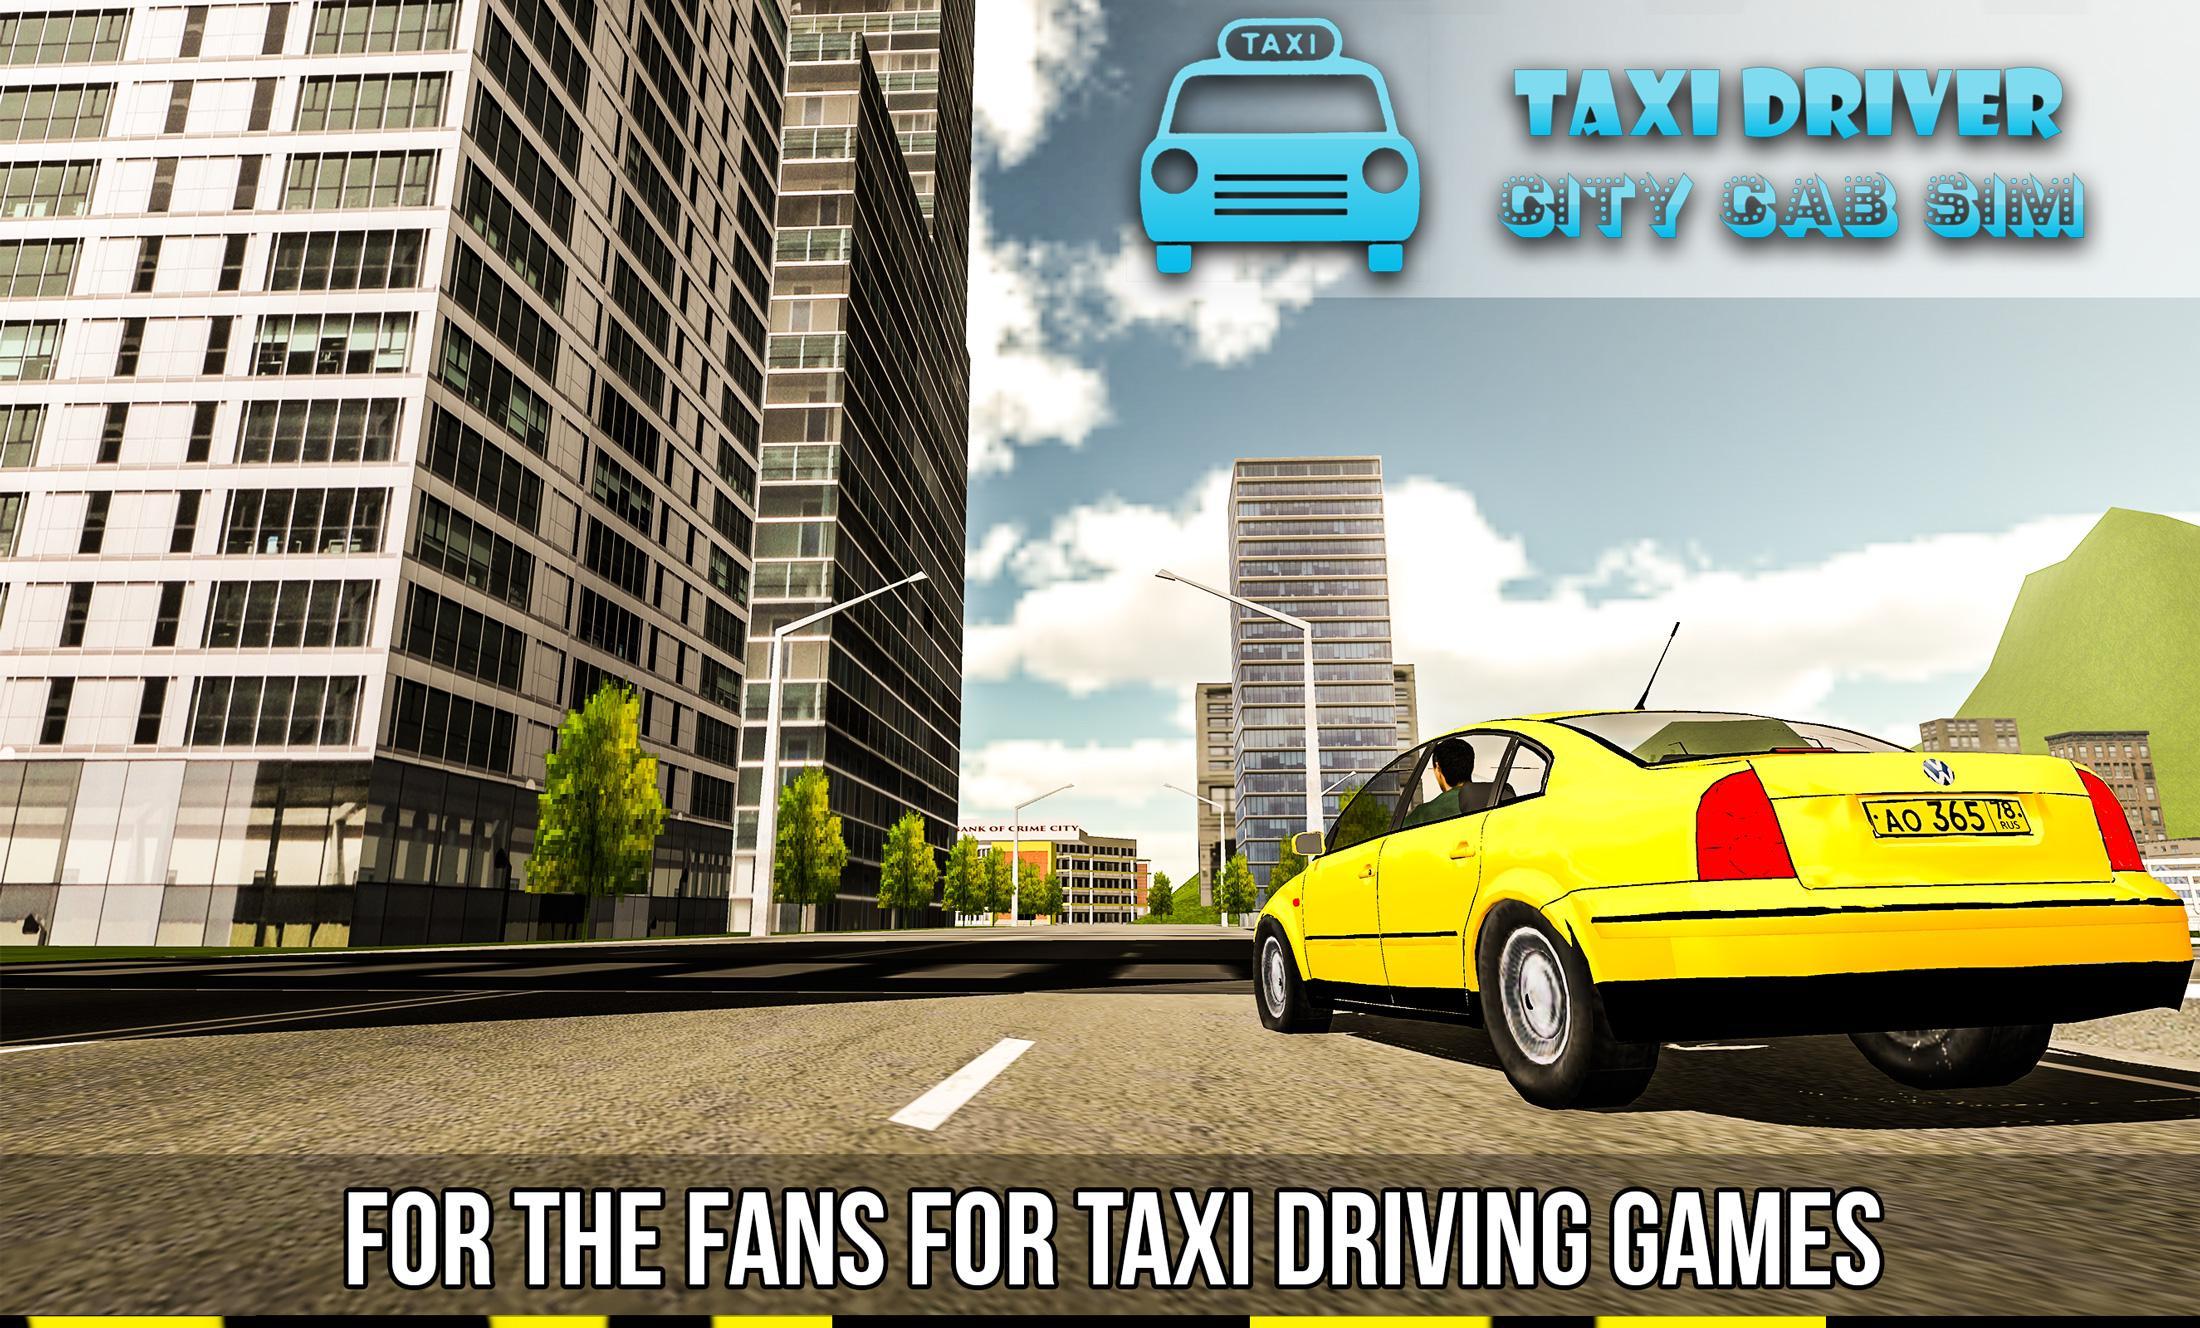 Taxi life a city driving simulator деньги. Такси драйв. City Driver такси. Таксопарк драйвер. Modern City Taxi Simulator.